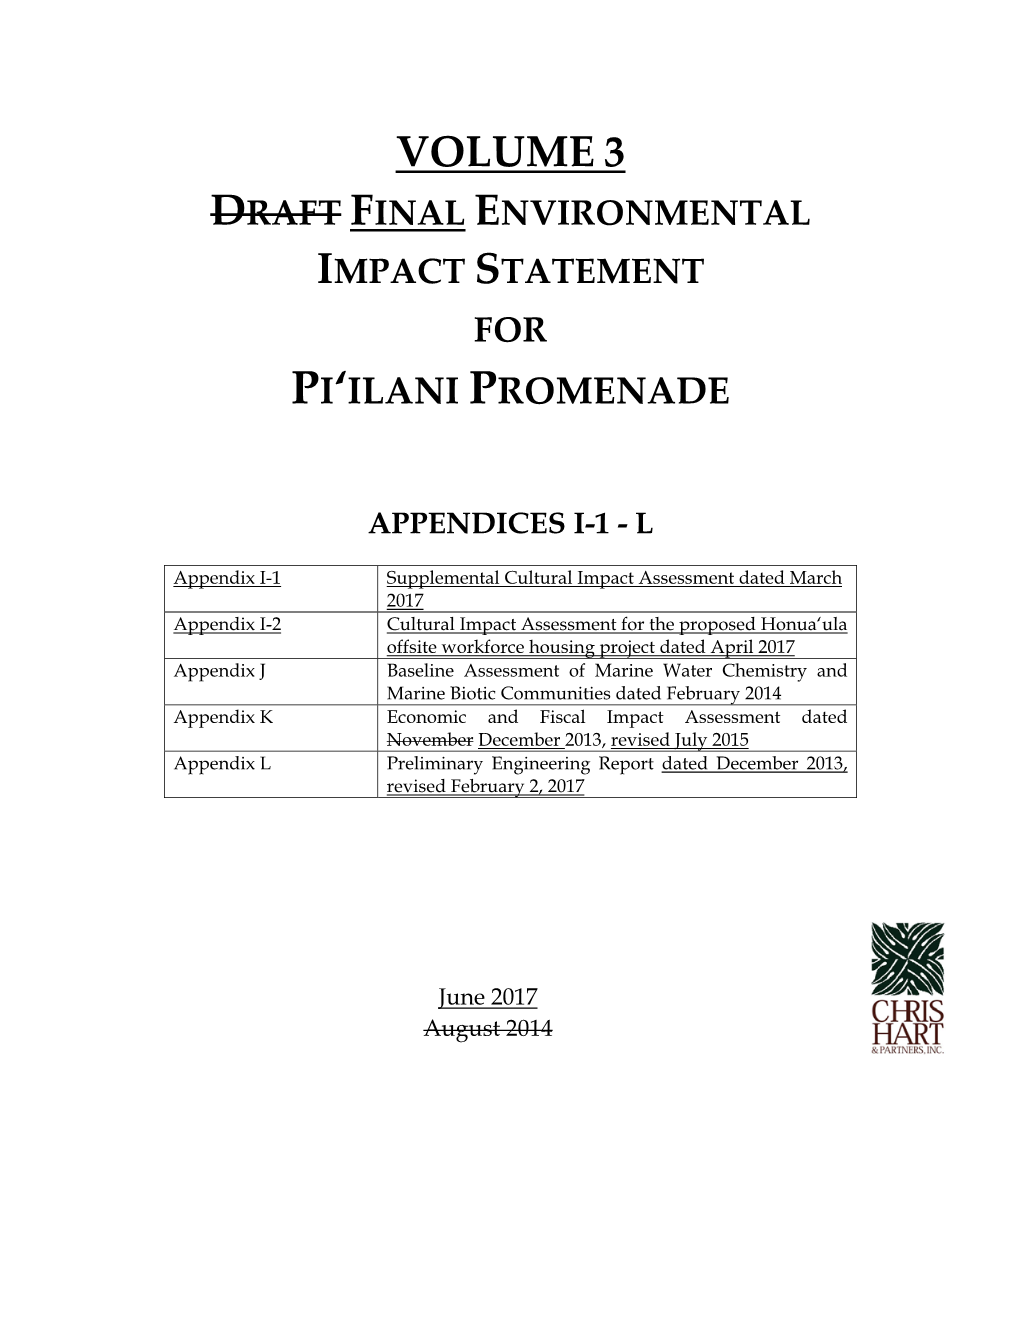 Volume 3 Draft Final Environmental Impact Statement for Pi‘Ilani Promenade